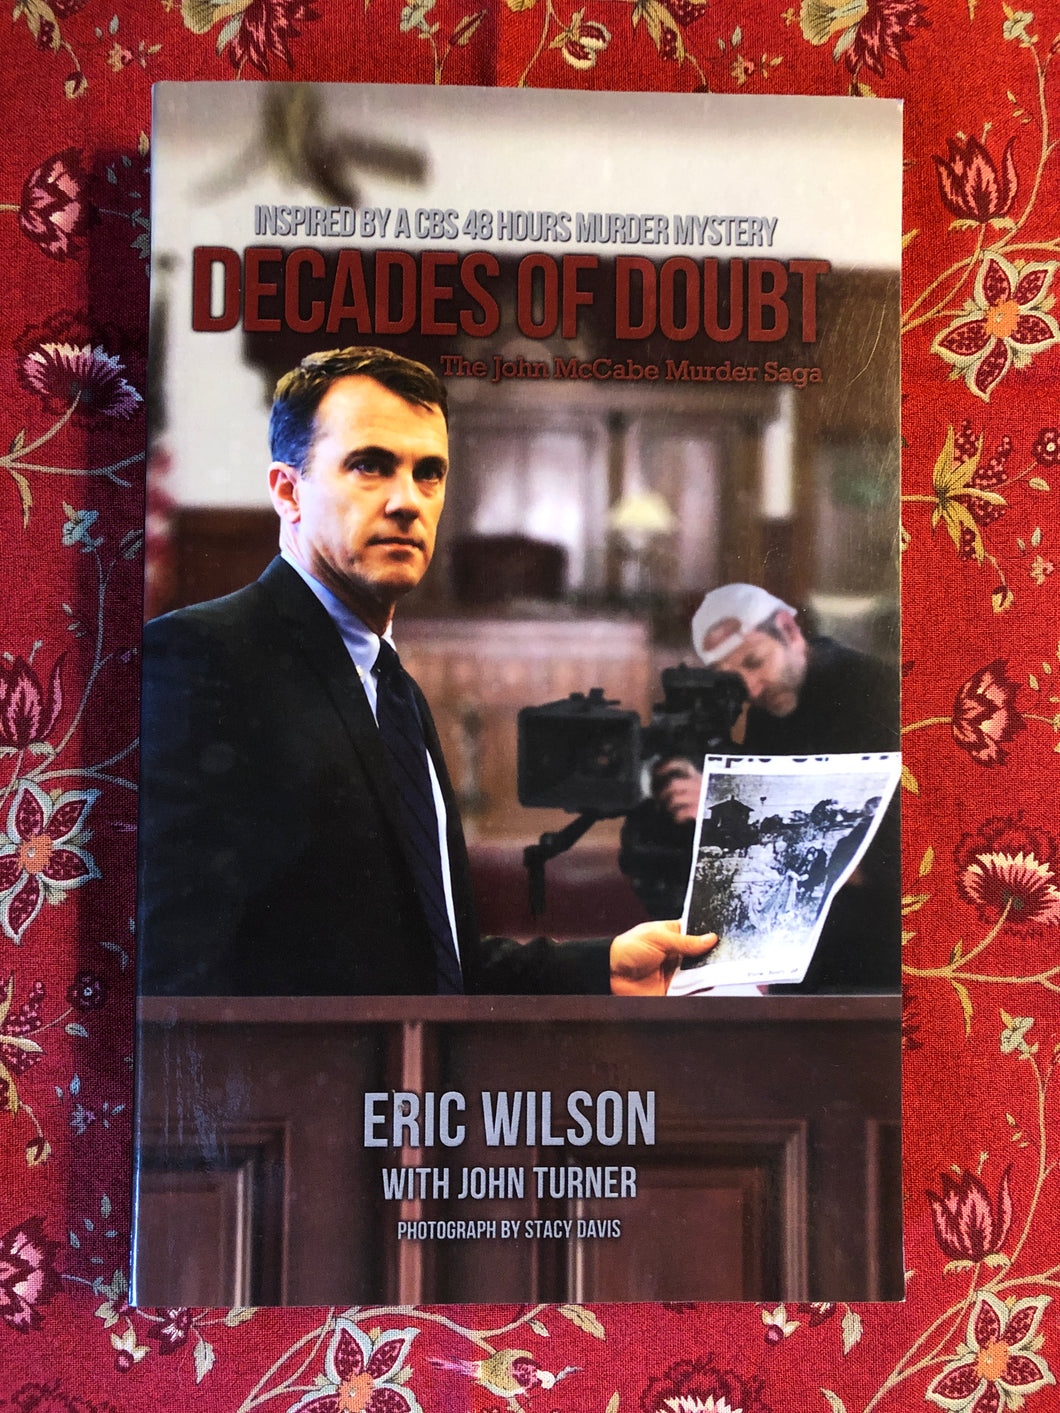 Decades of Doubt: The John McCabe Murder Saga